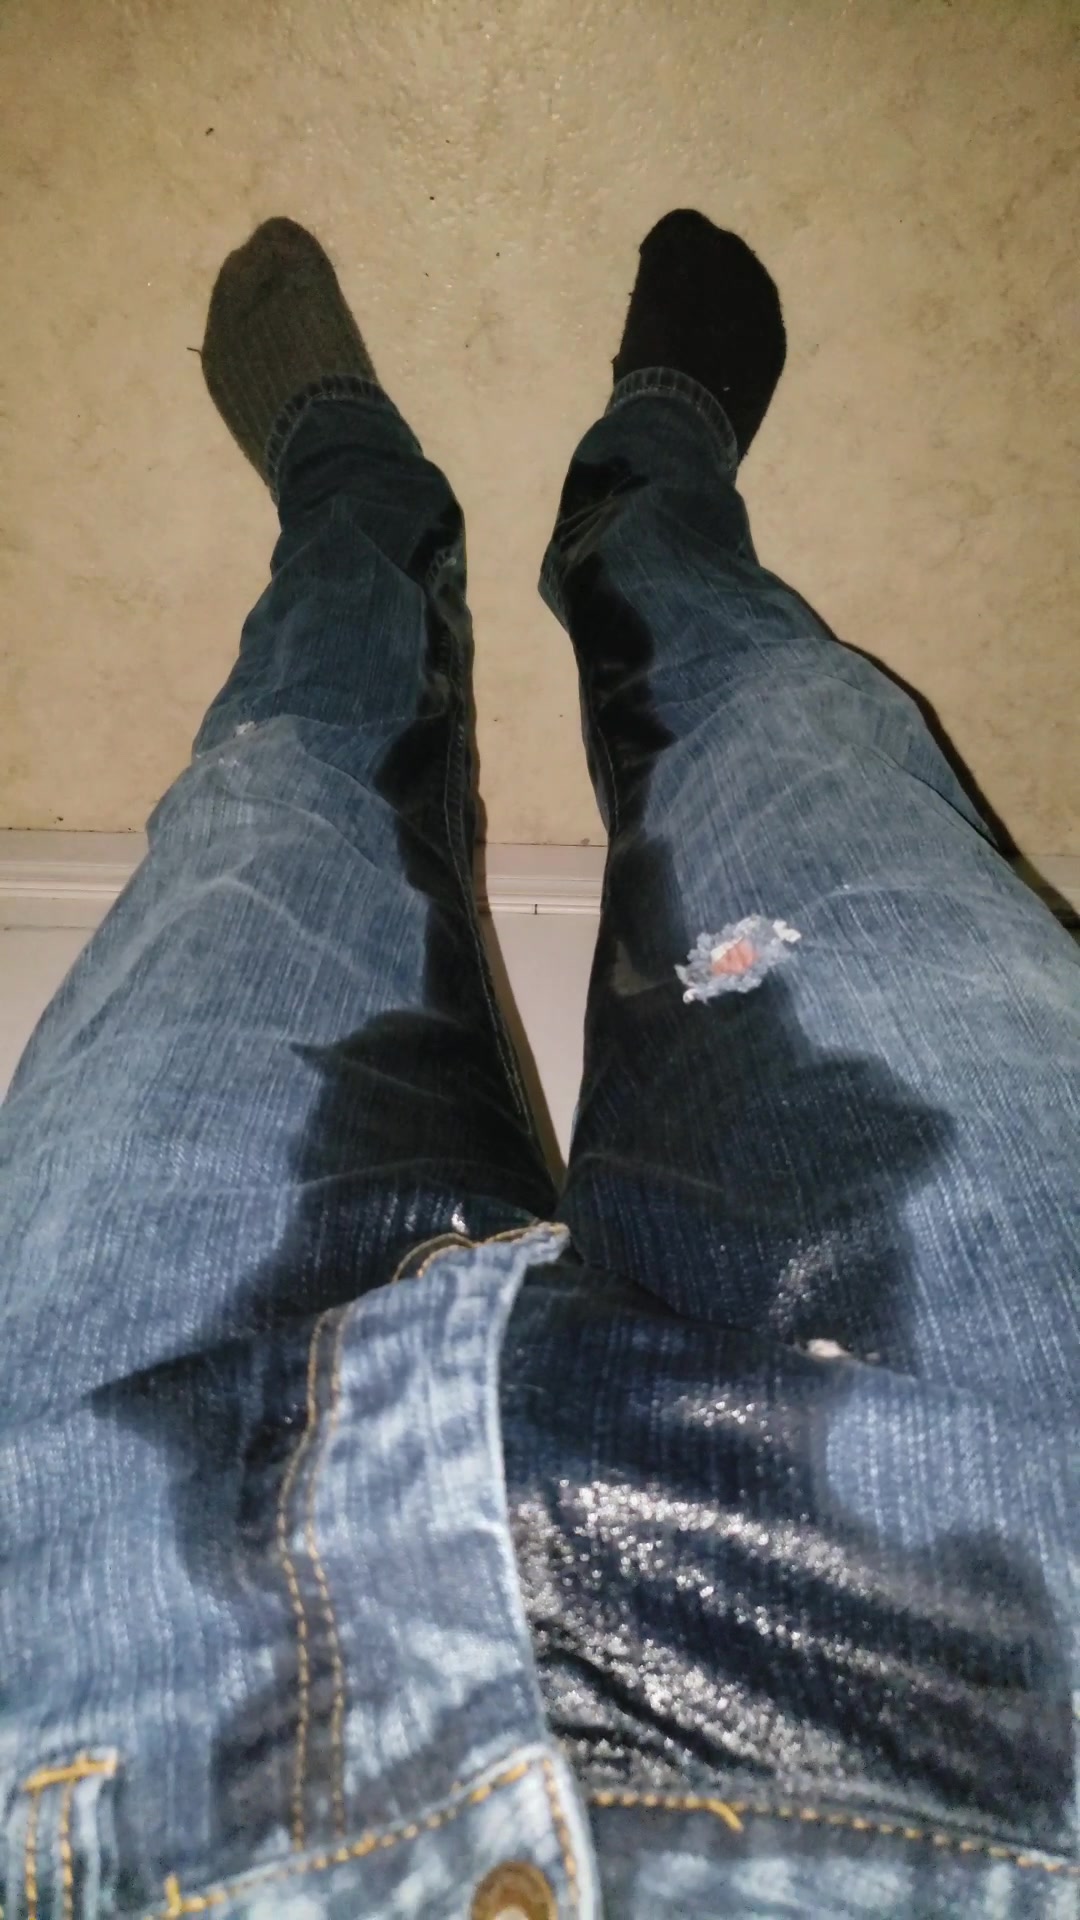 wet my jeans